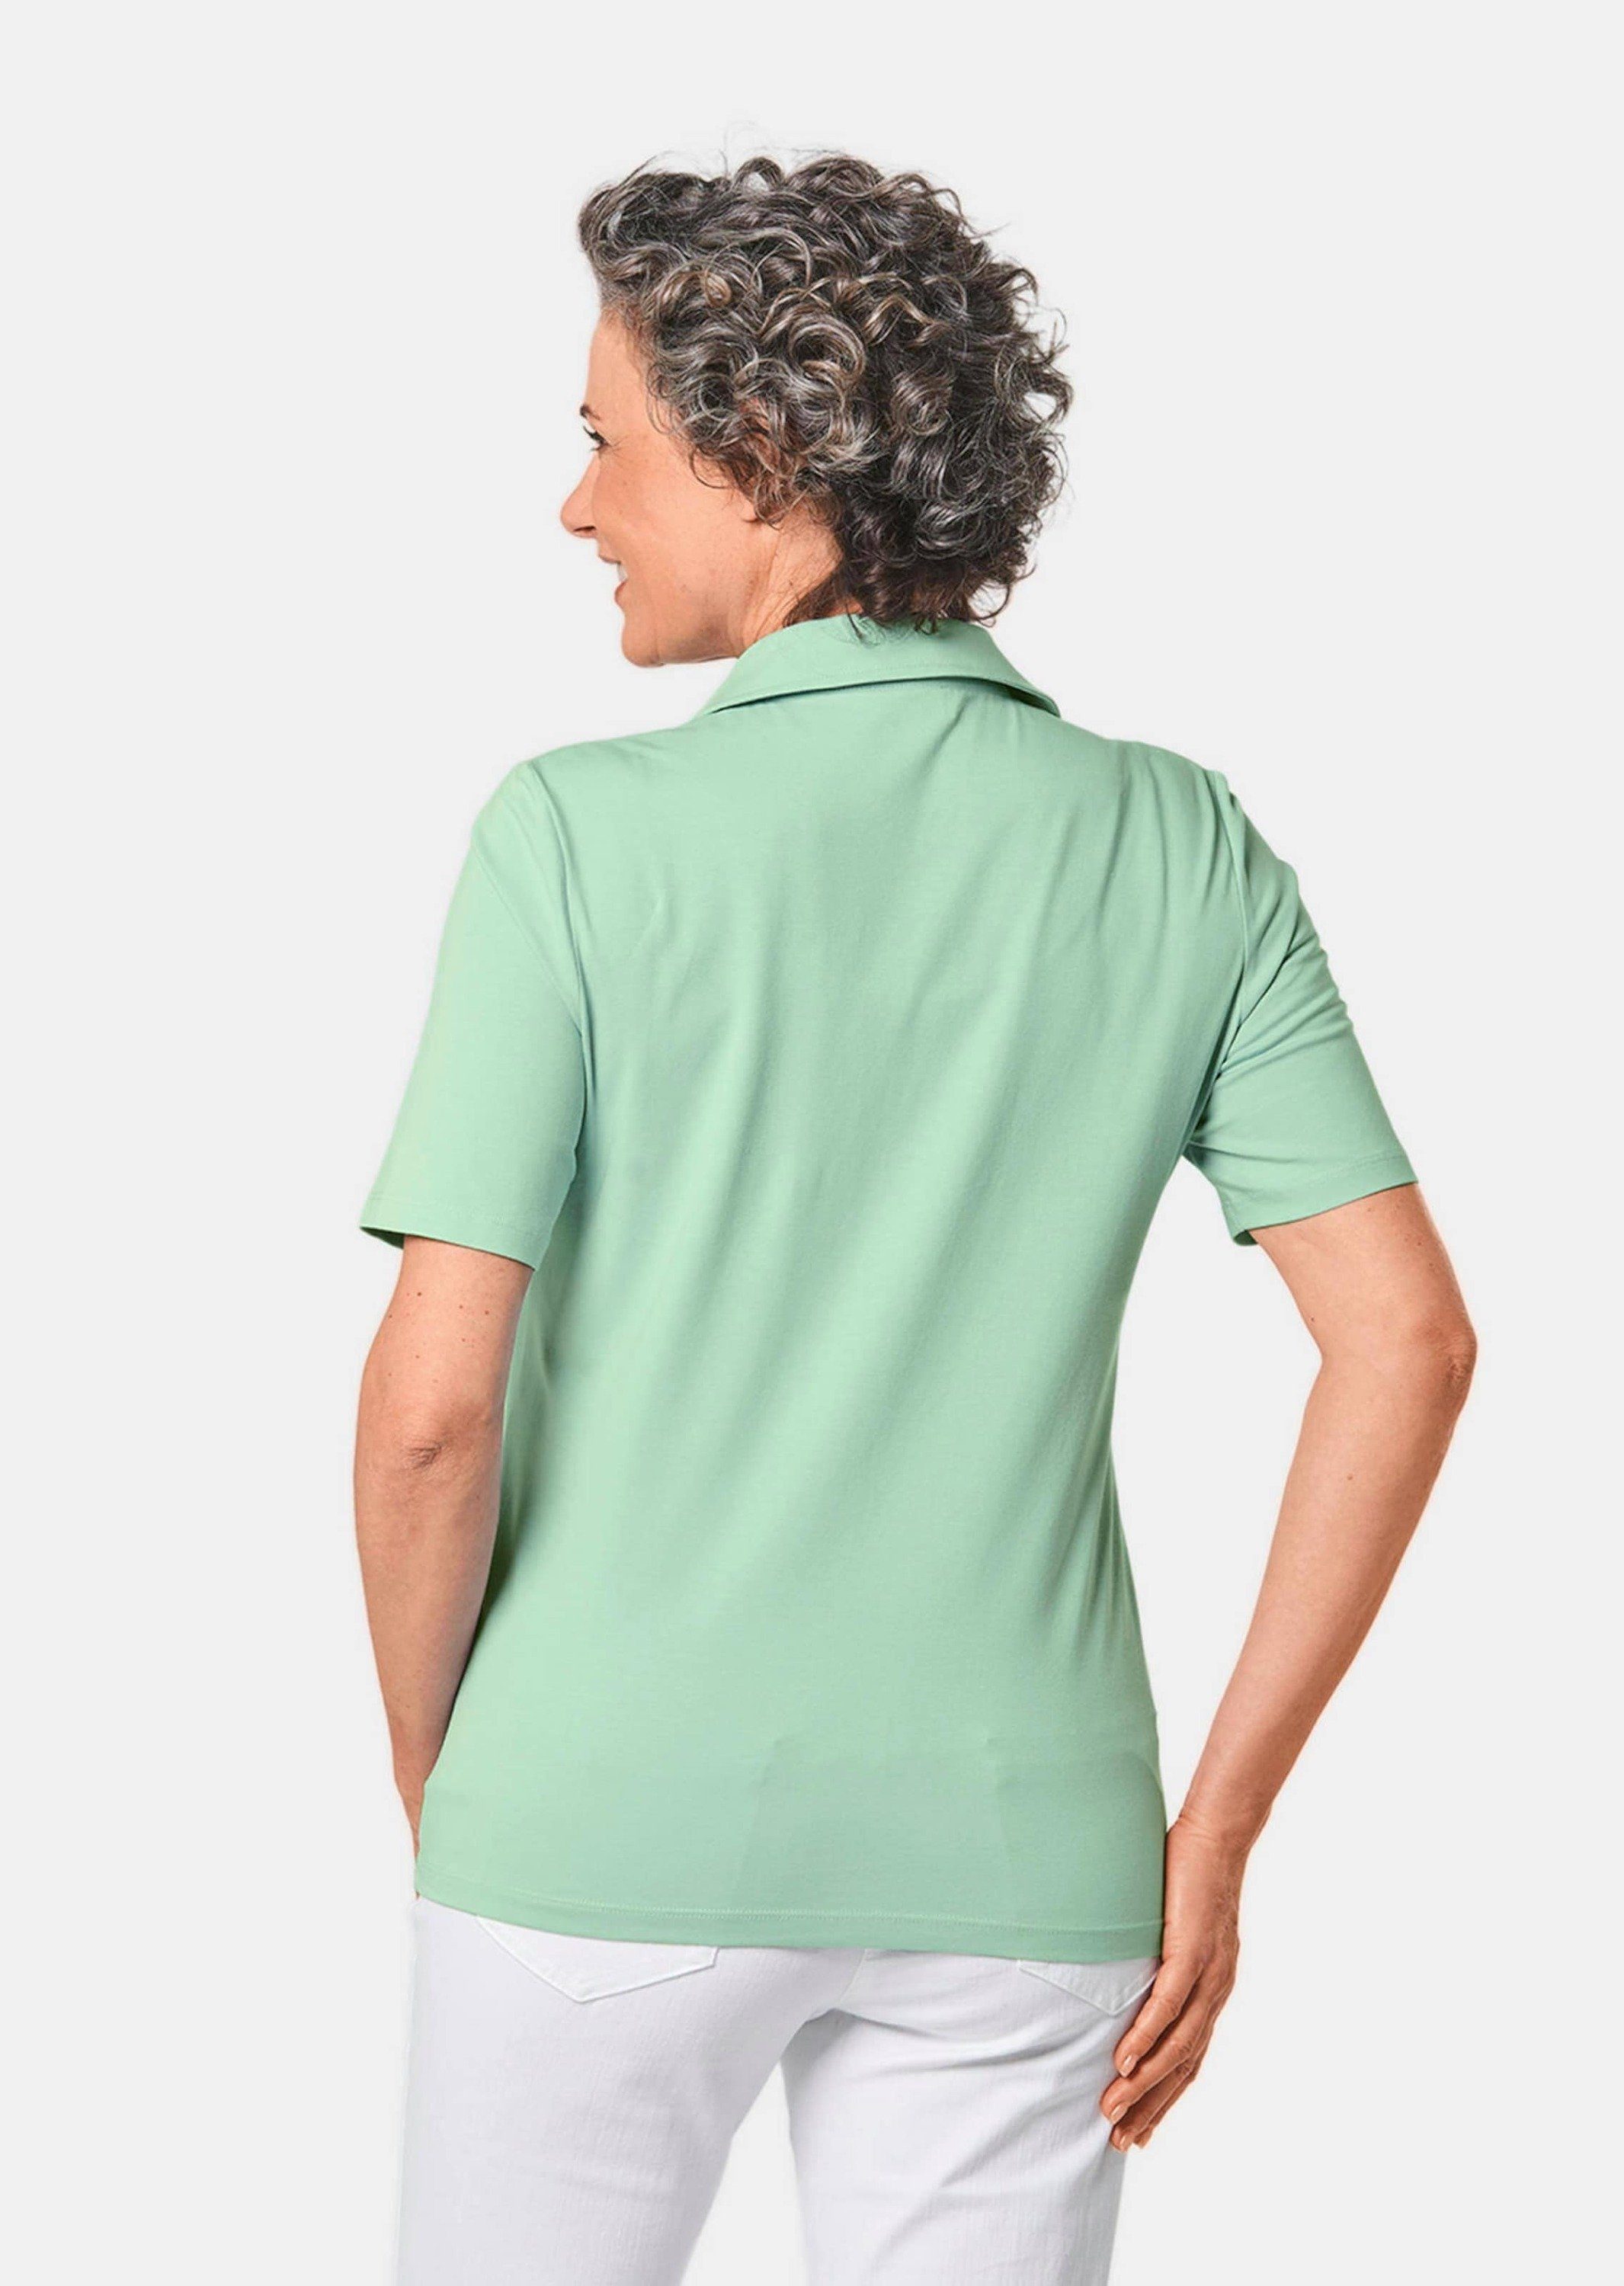 Poloshirt GOLDNER Stretchbequemes Kurzgröße: Poloshirt mintgrün